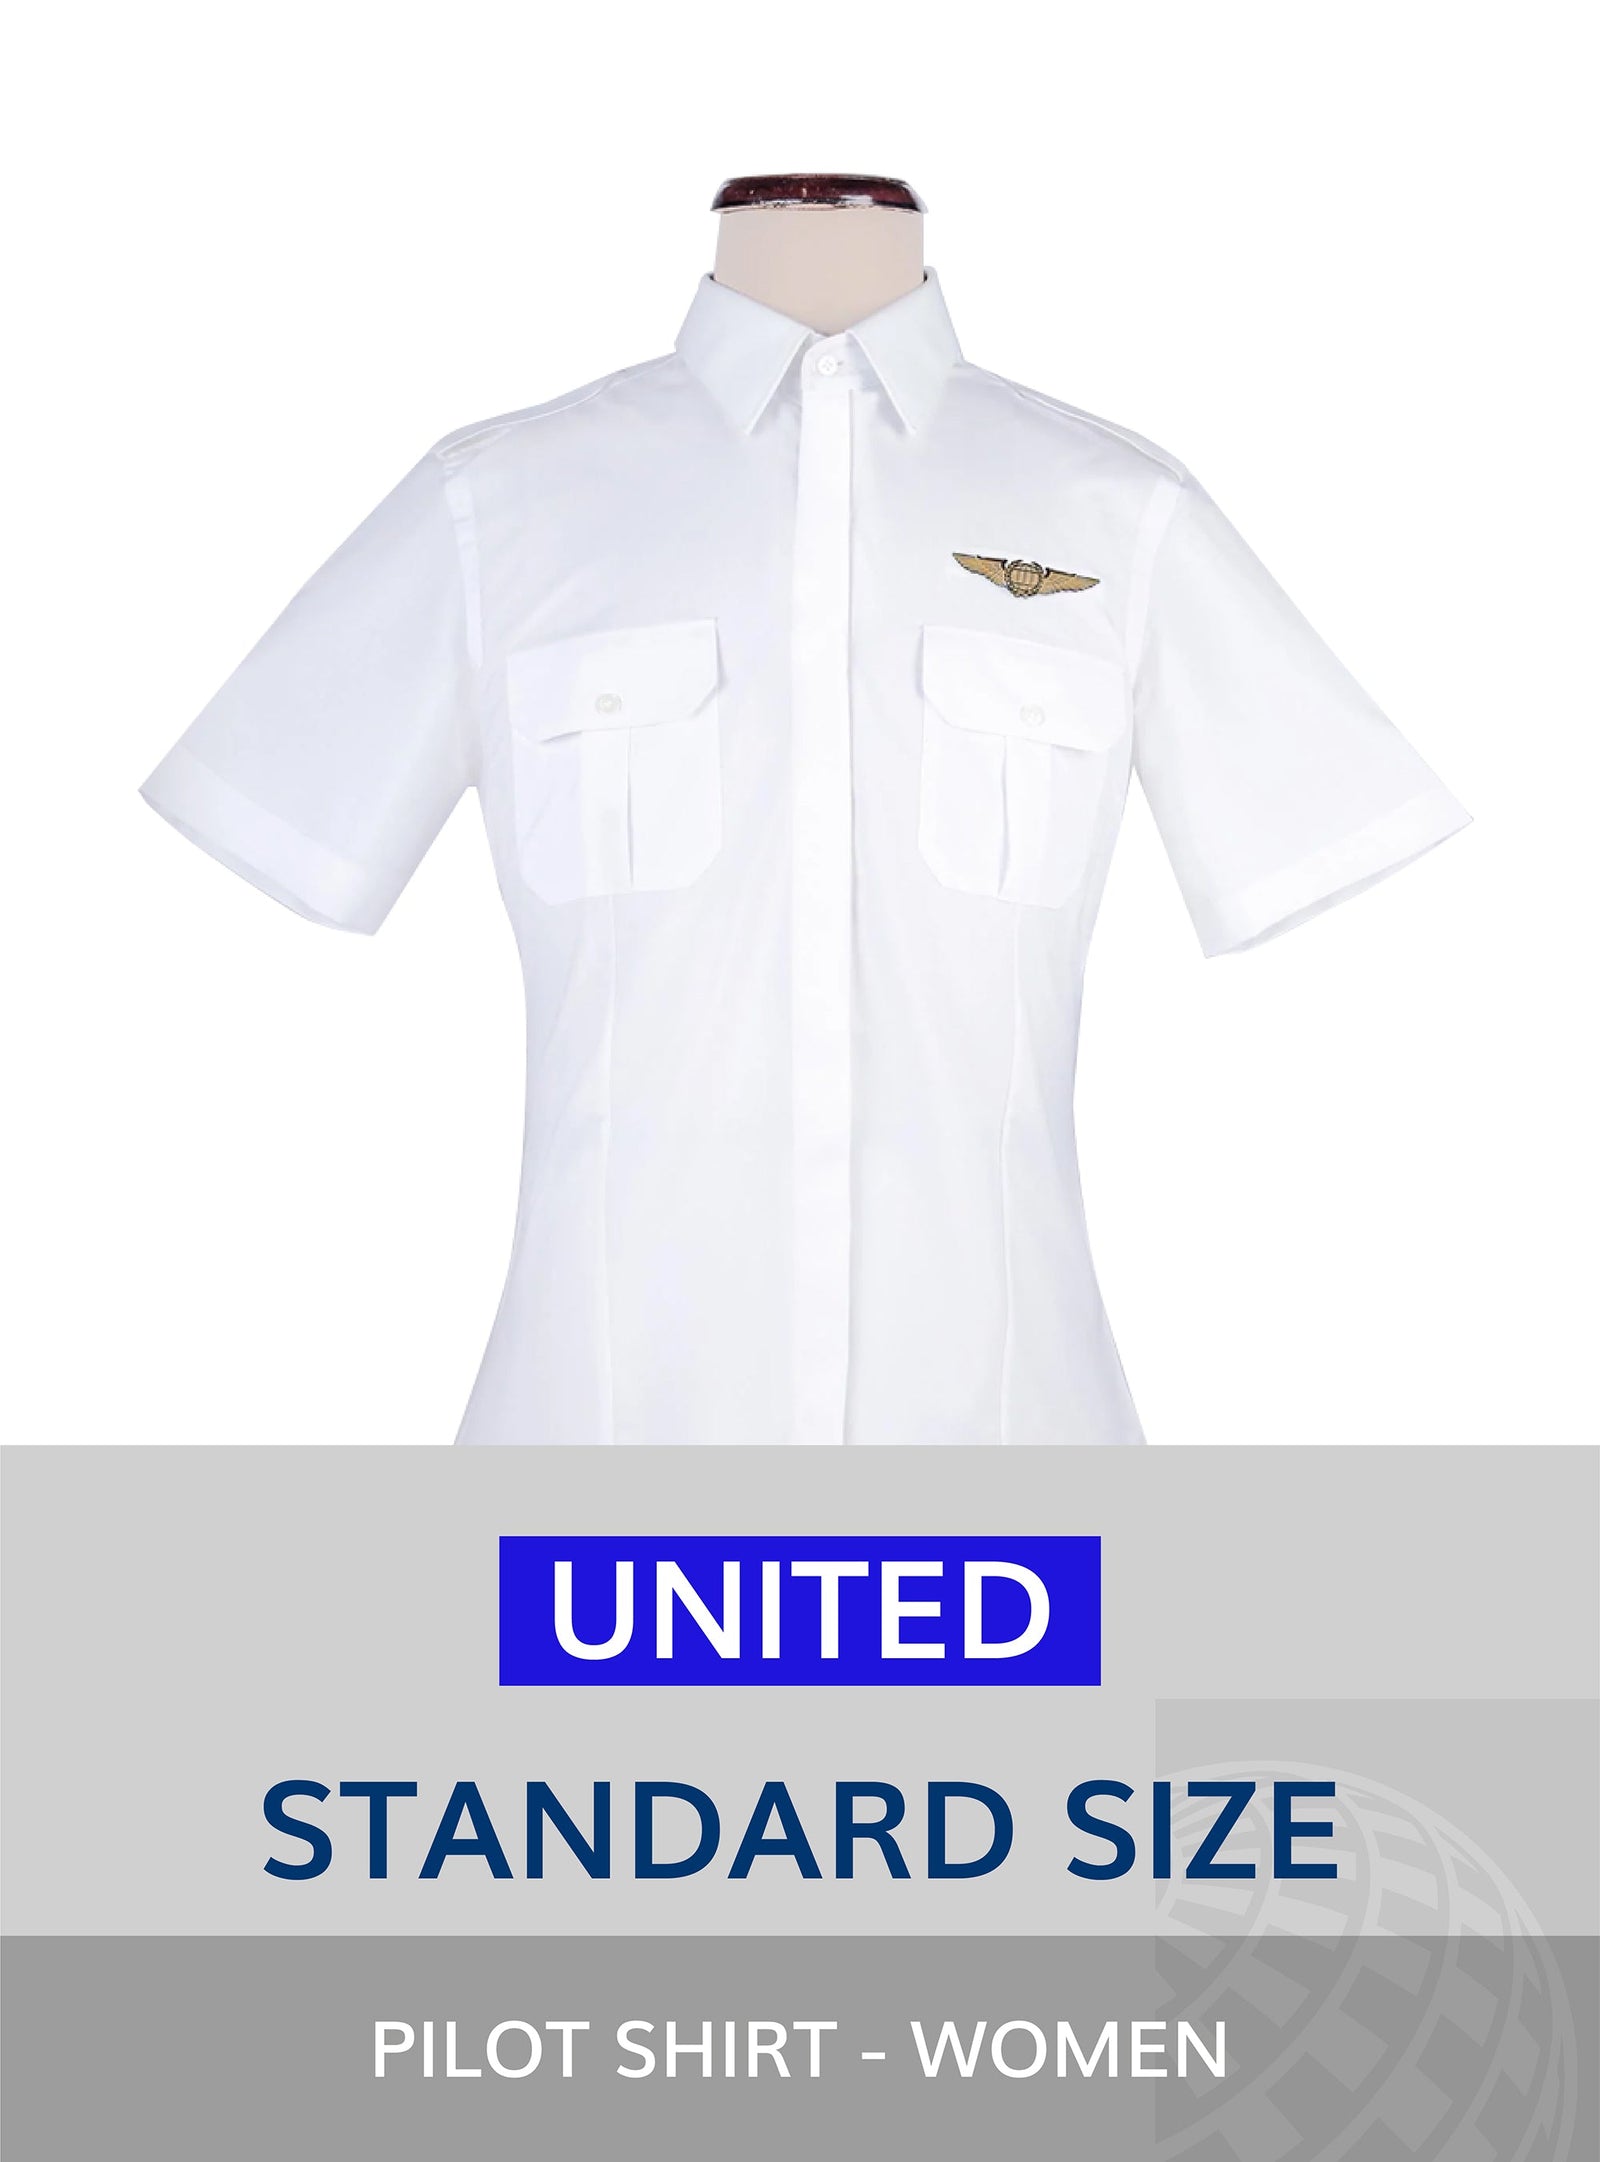 United Standard size pilot shit for women